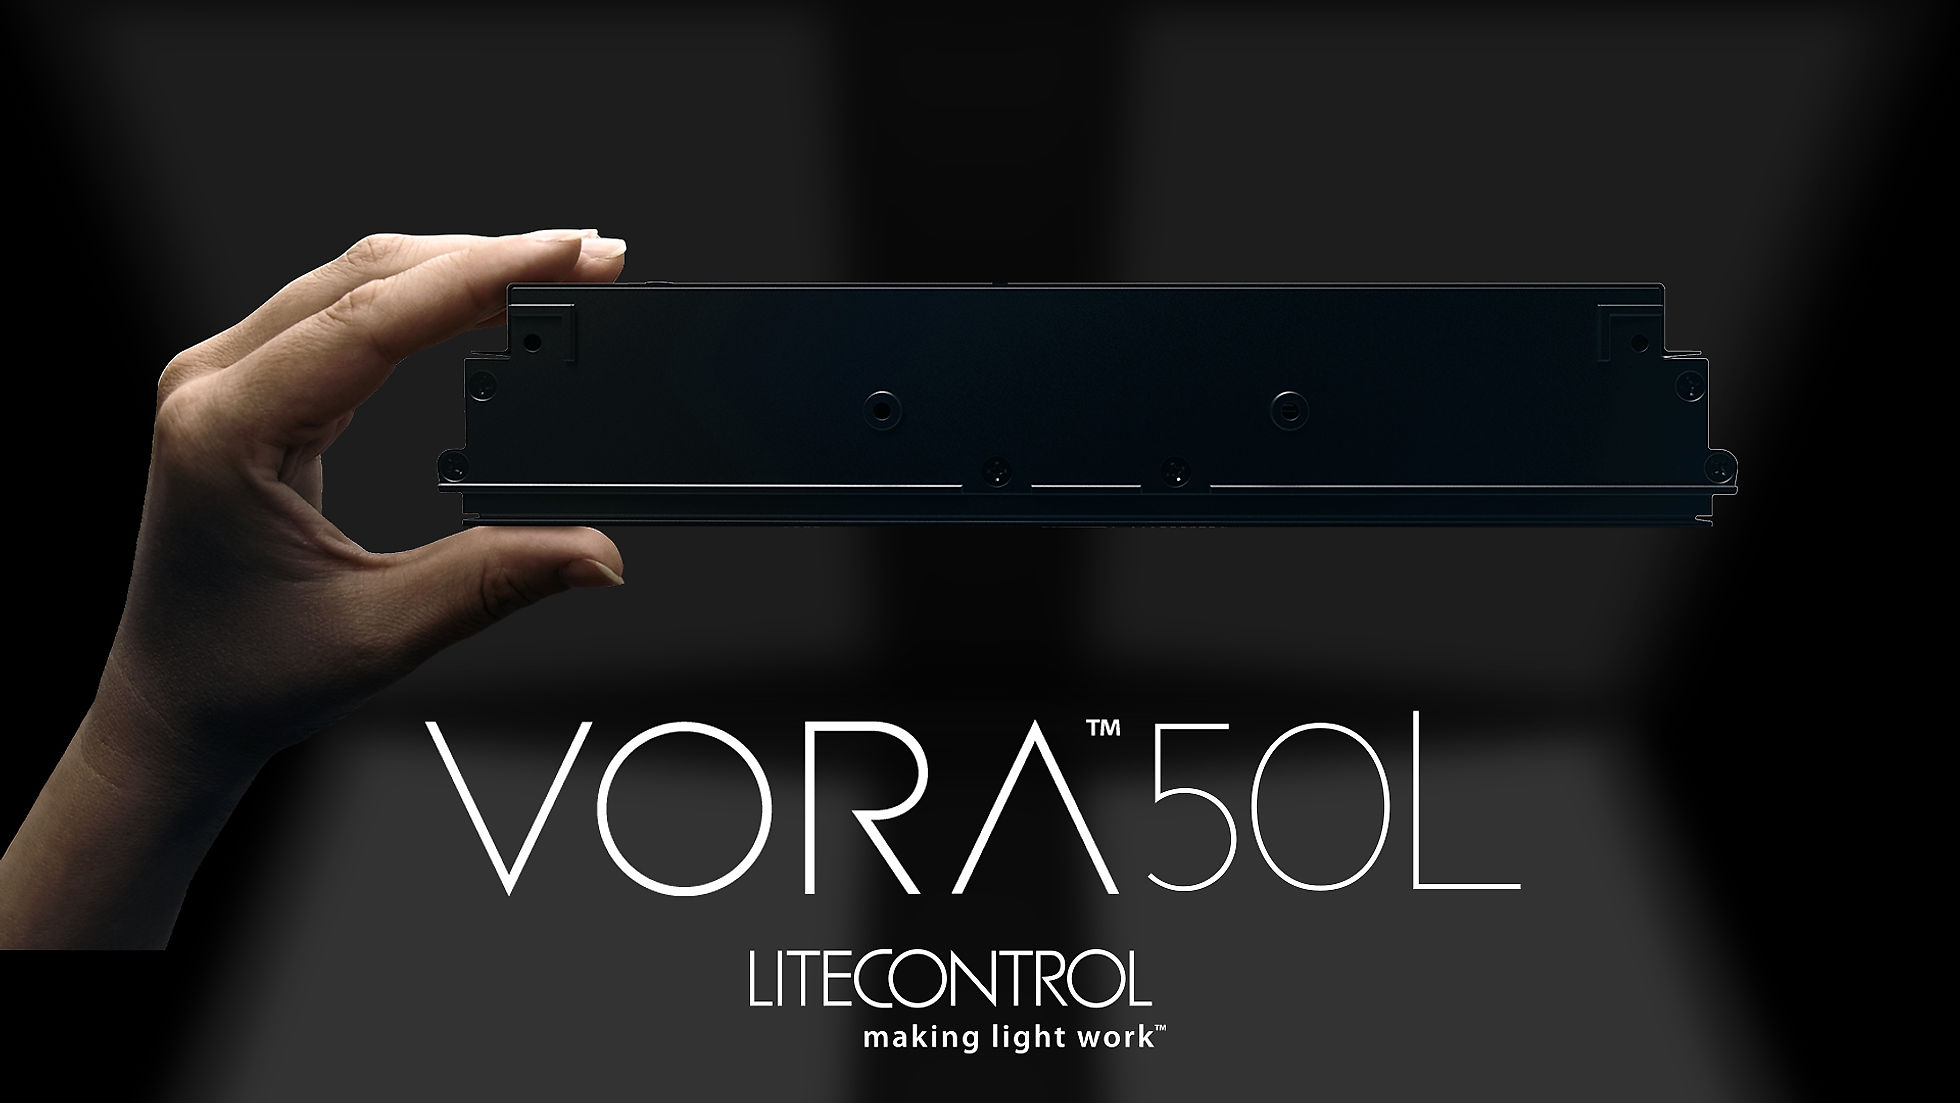 Litecontrol Vora™ 50L Architectural Recessed Troffer with Edge-Lit Technology